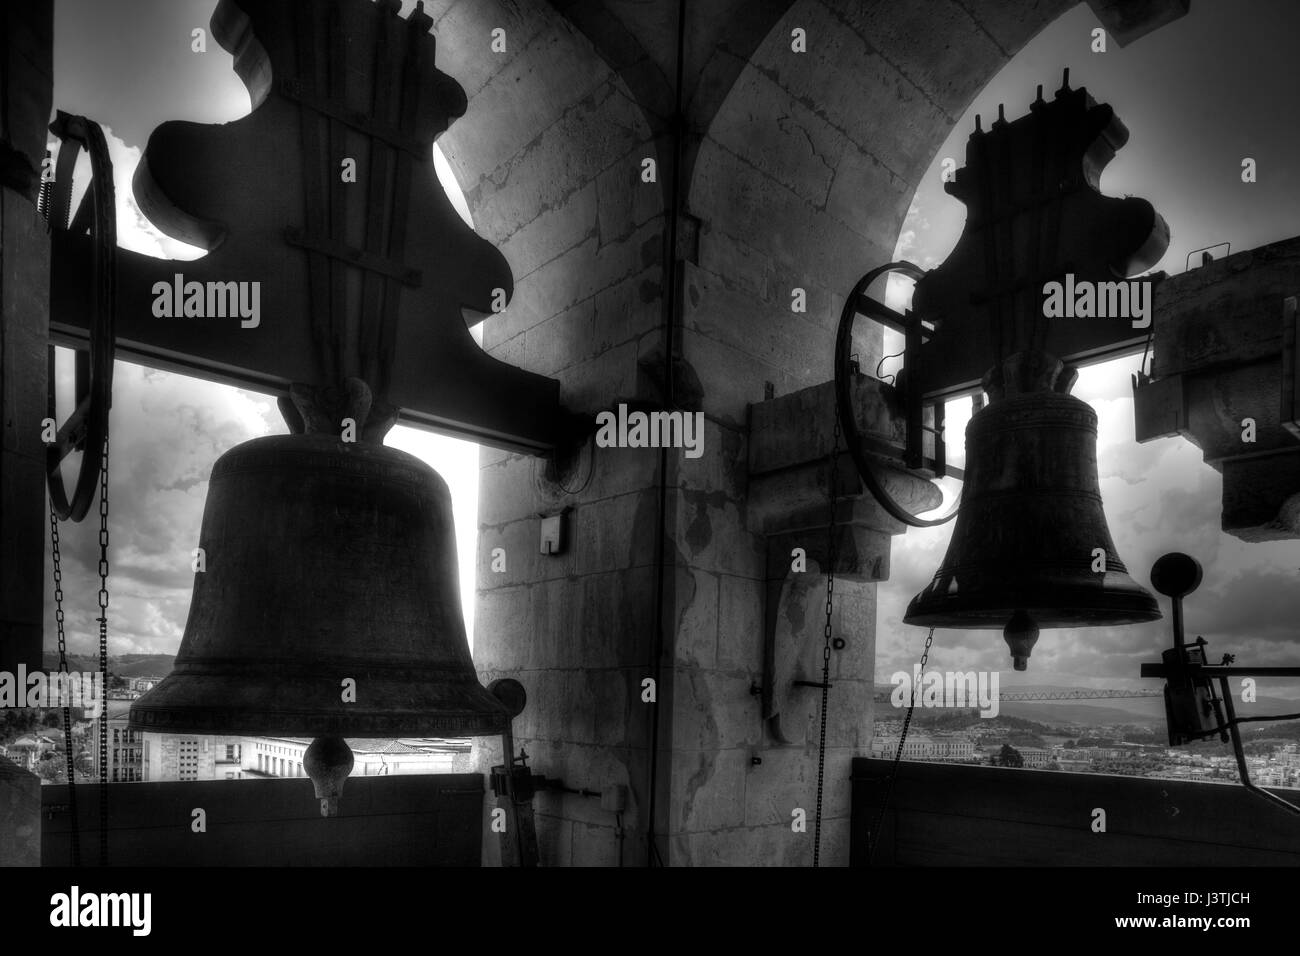 Clocks in Clock Tower of University of Coimbra, Coimbra, Portugal, Europe I Glocken im Glockenturm der  Universität, Coimbra, Beira Litoral, Regio Cen Stock Photo